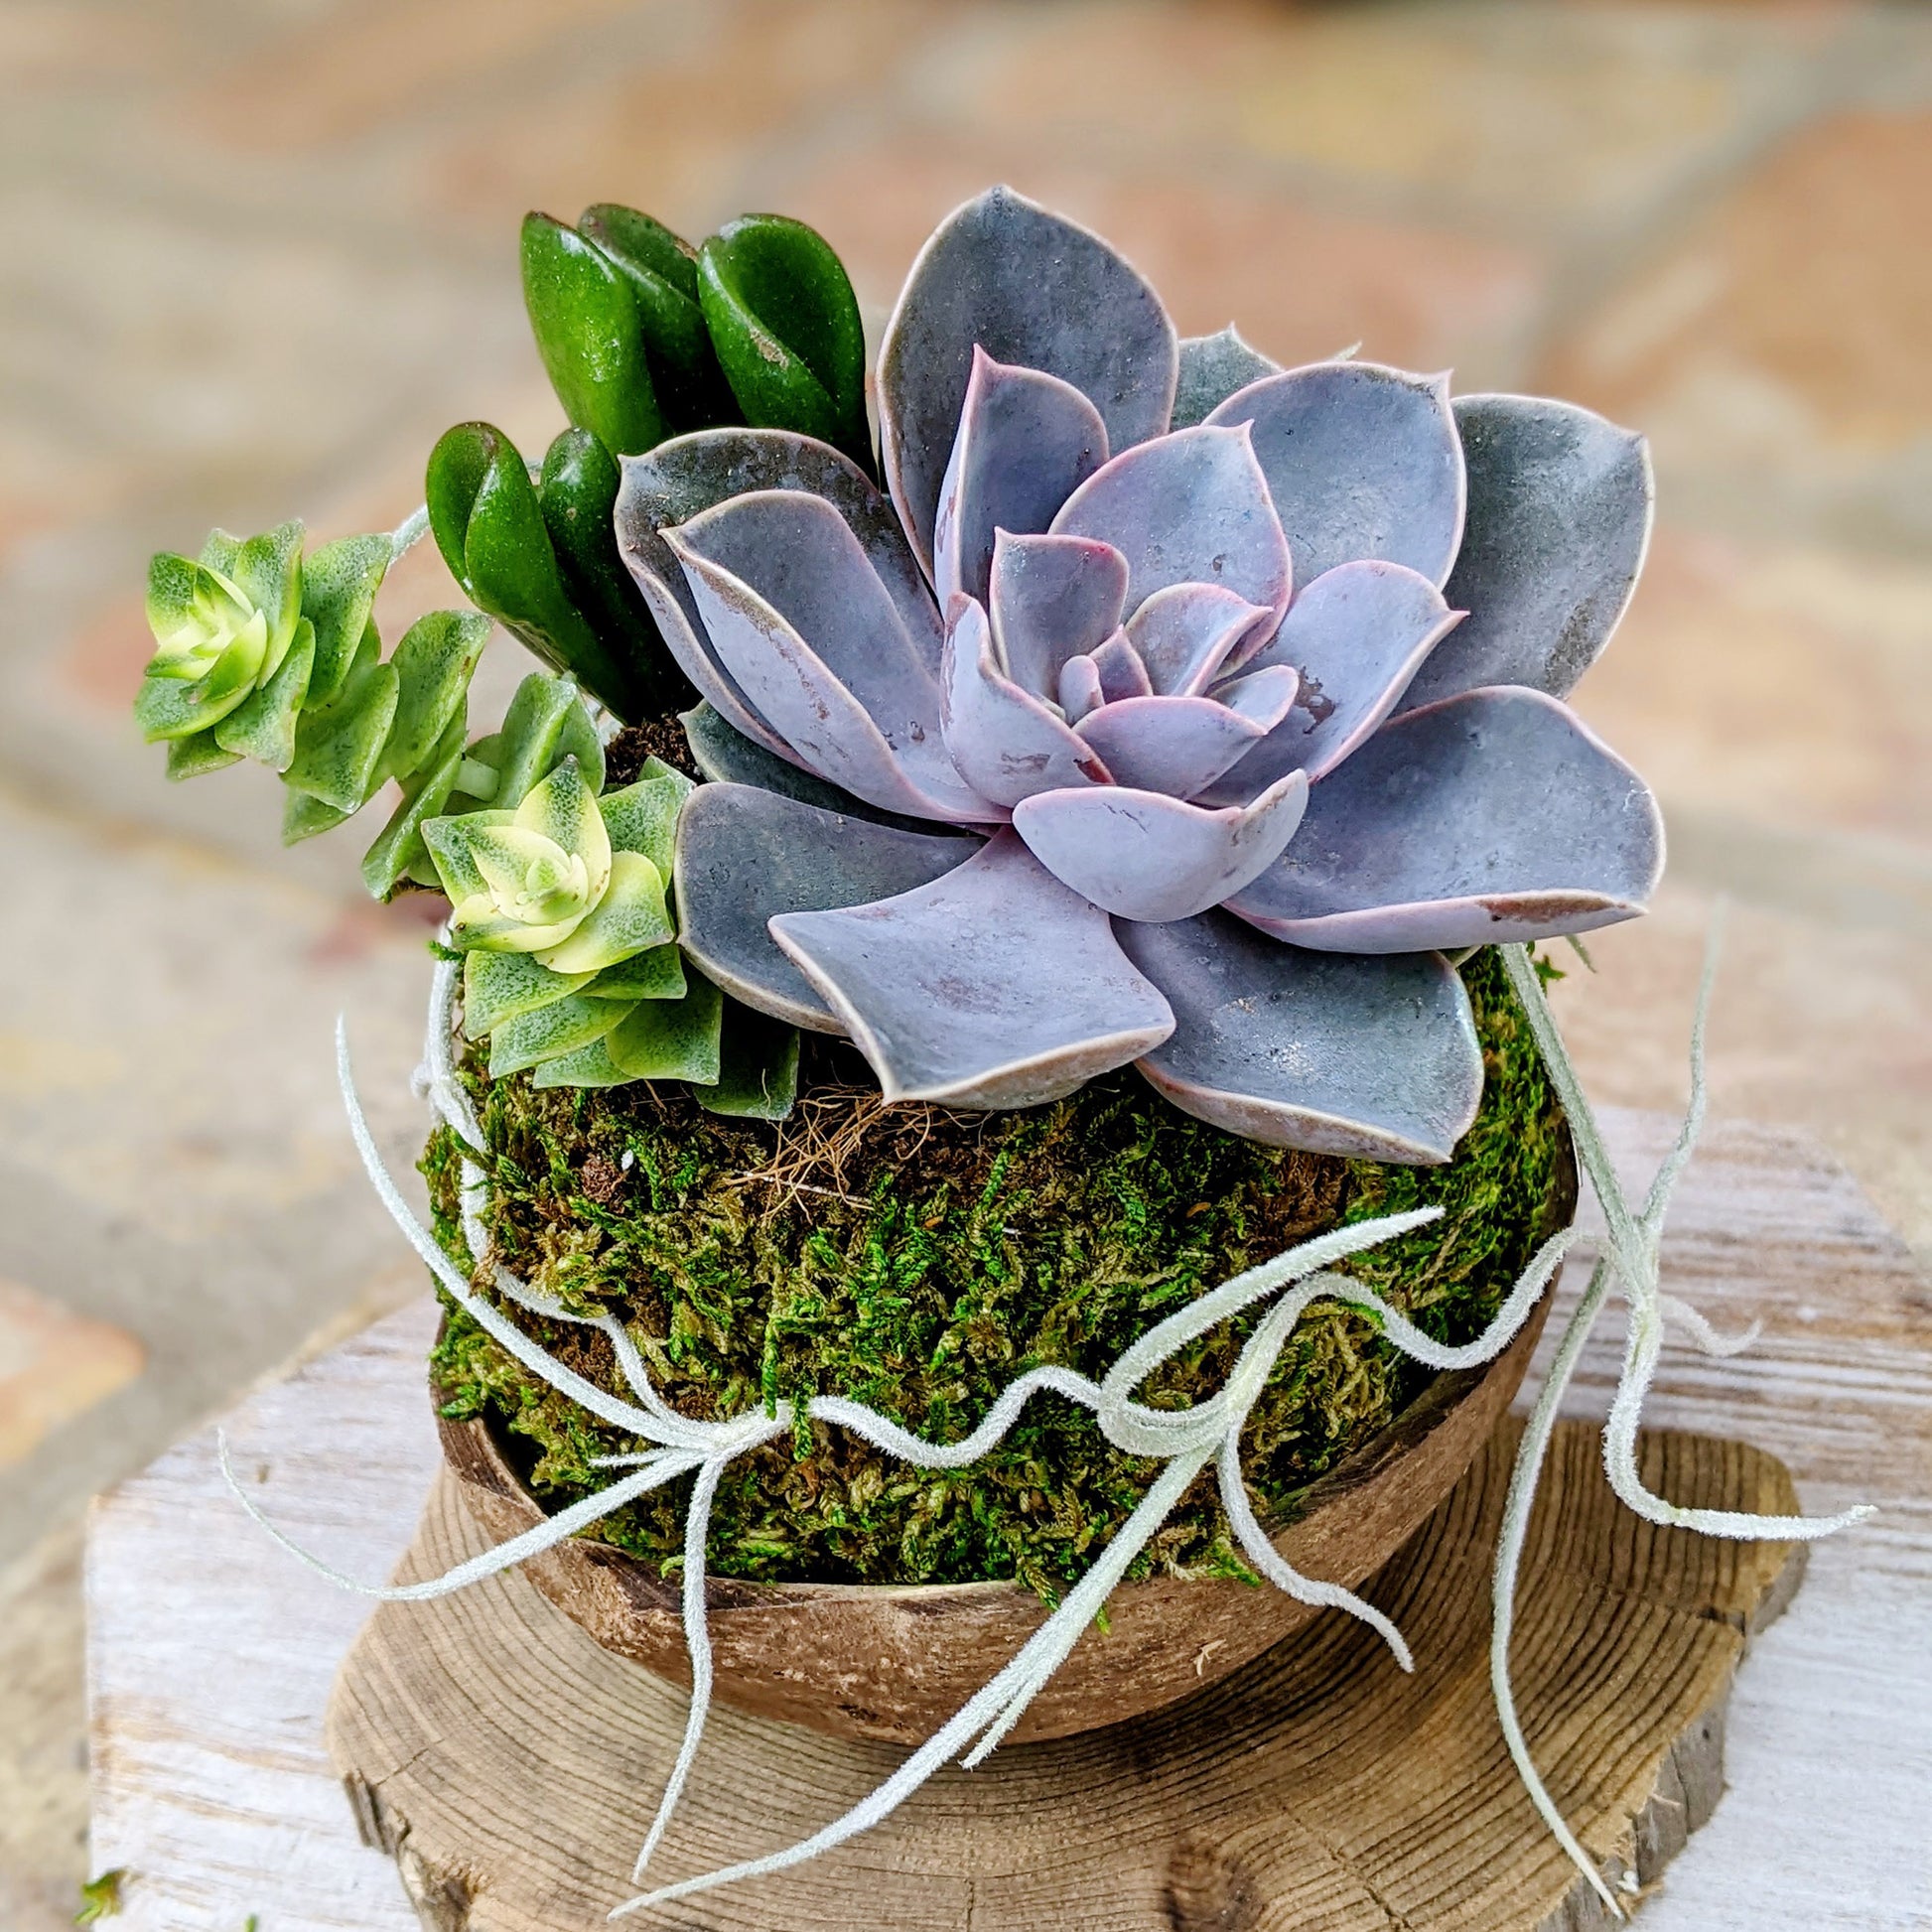 Mother's Day Flowers That Last: Live Succulent Arrangement in a Coconut Shell | Unique Succulent Gift